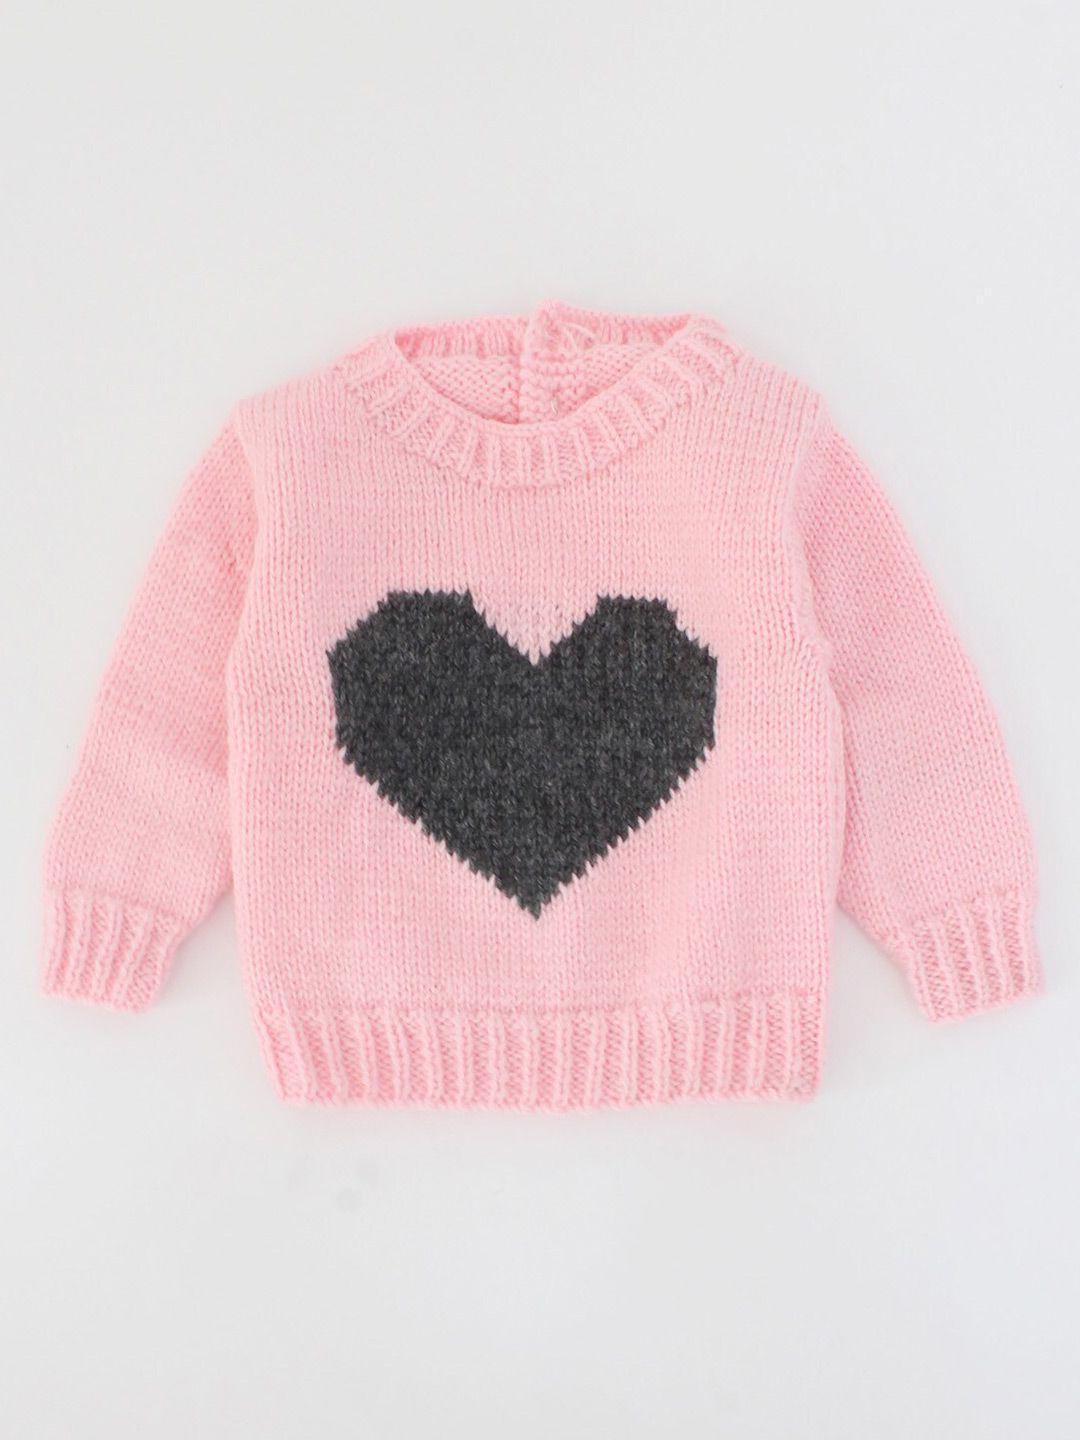 woonie unisex kids pink & black colourblocked pullover